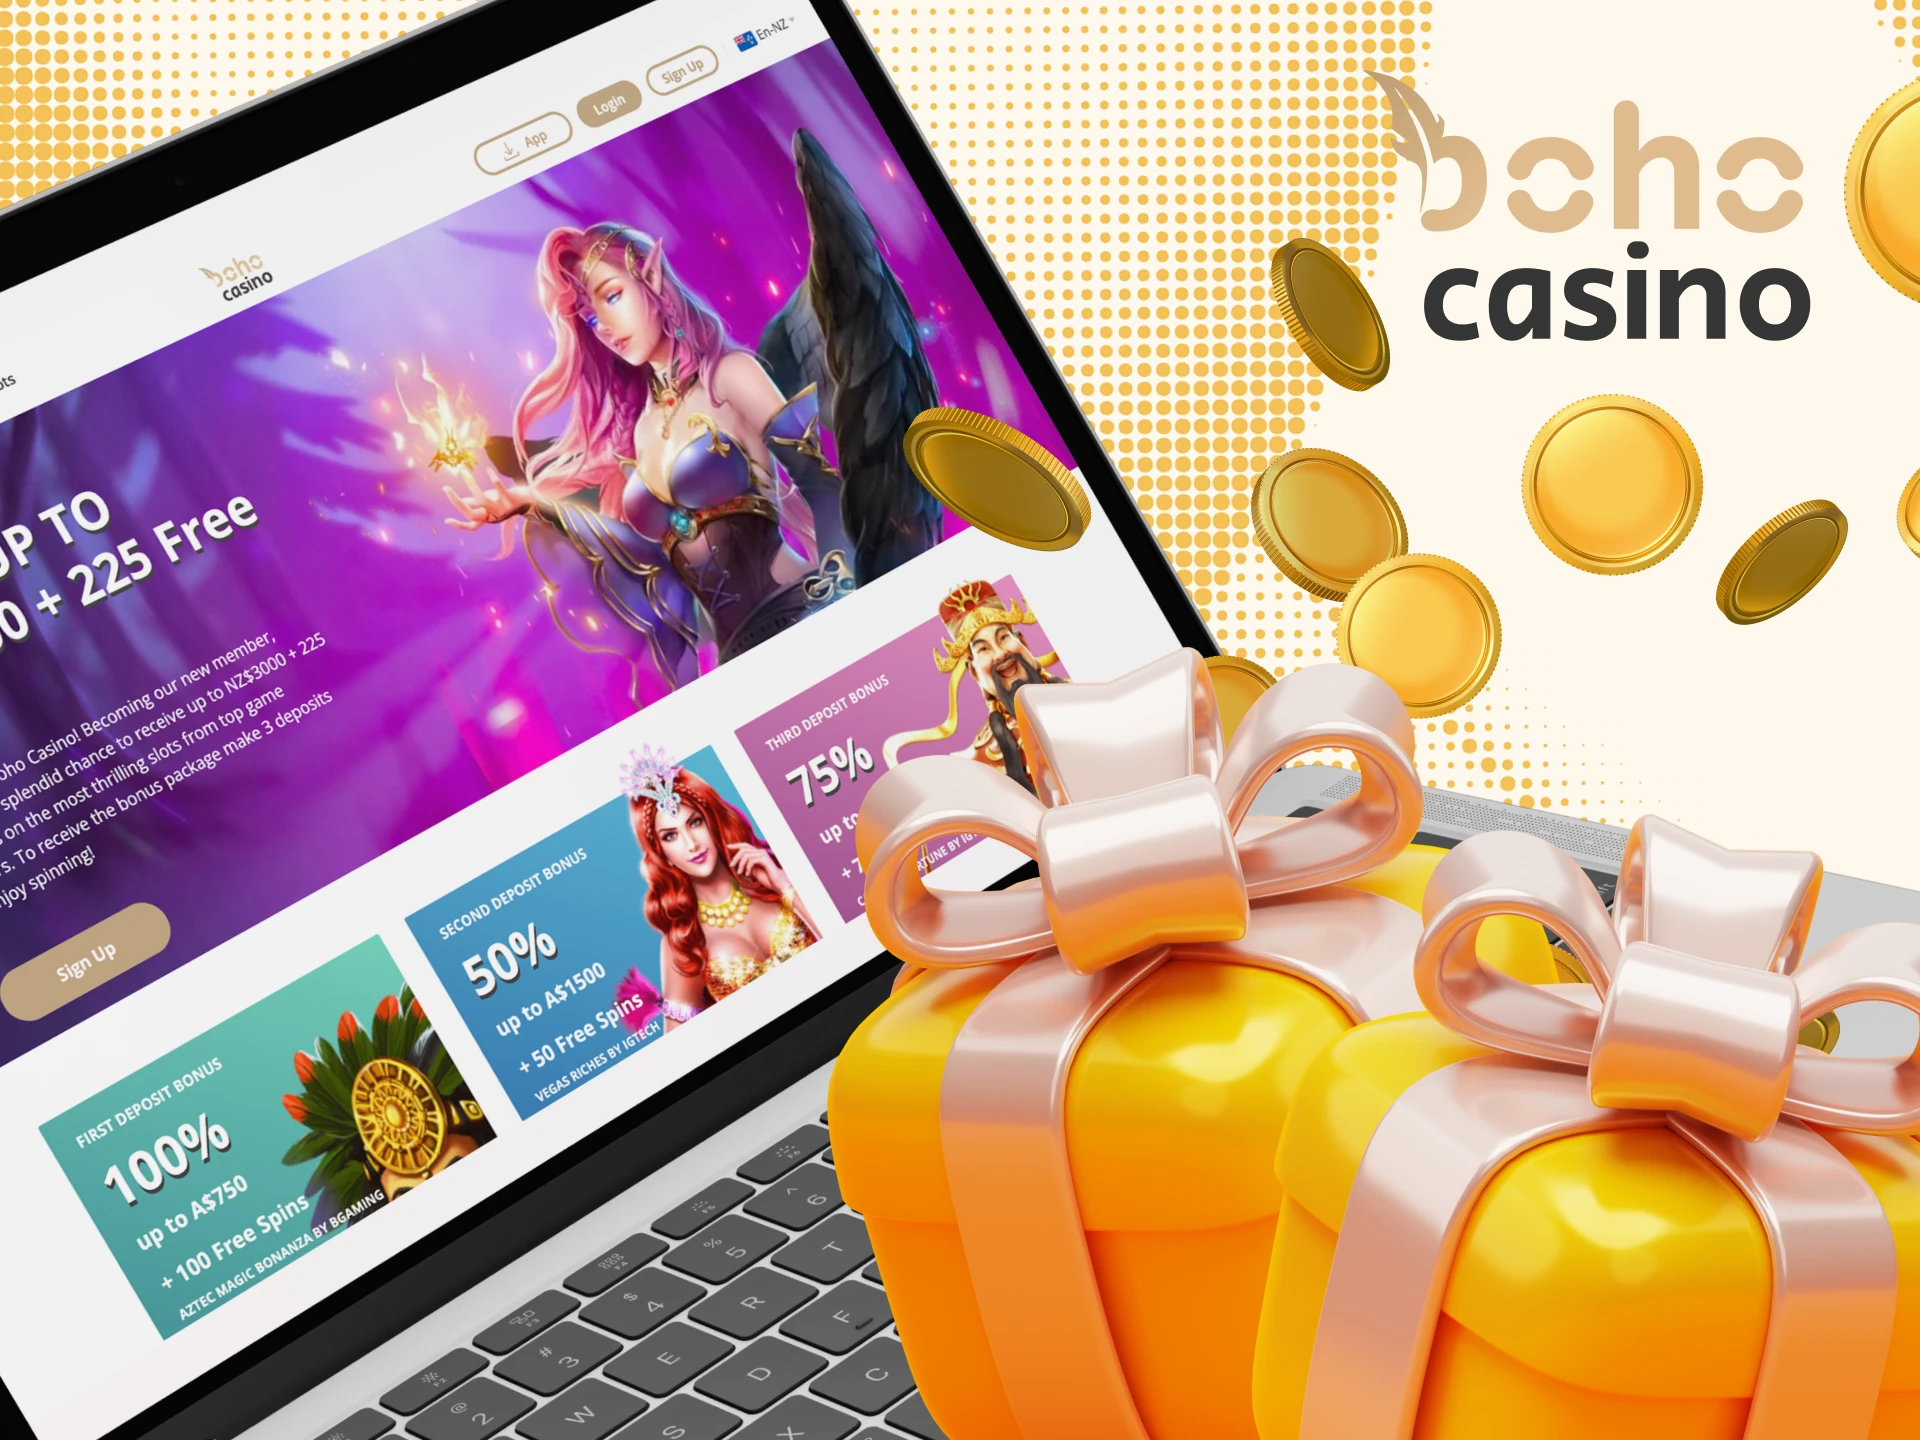 What bonus can I get when registering on the Boho online casino website.